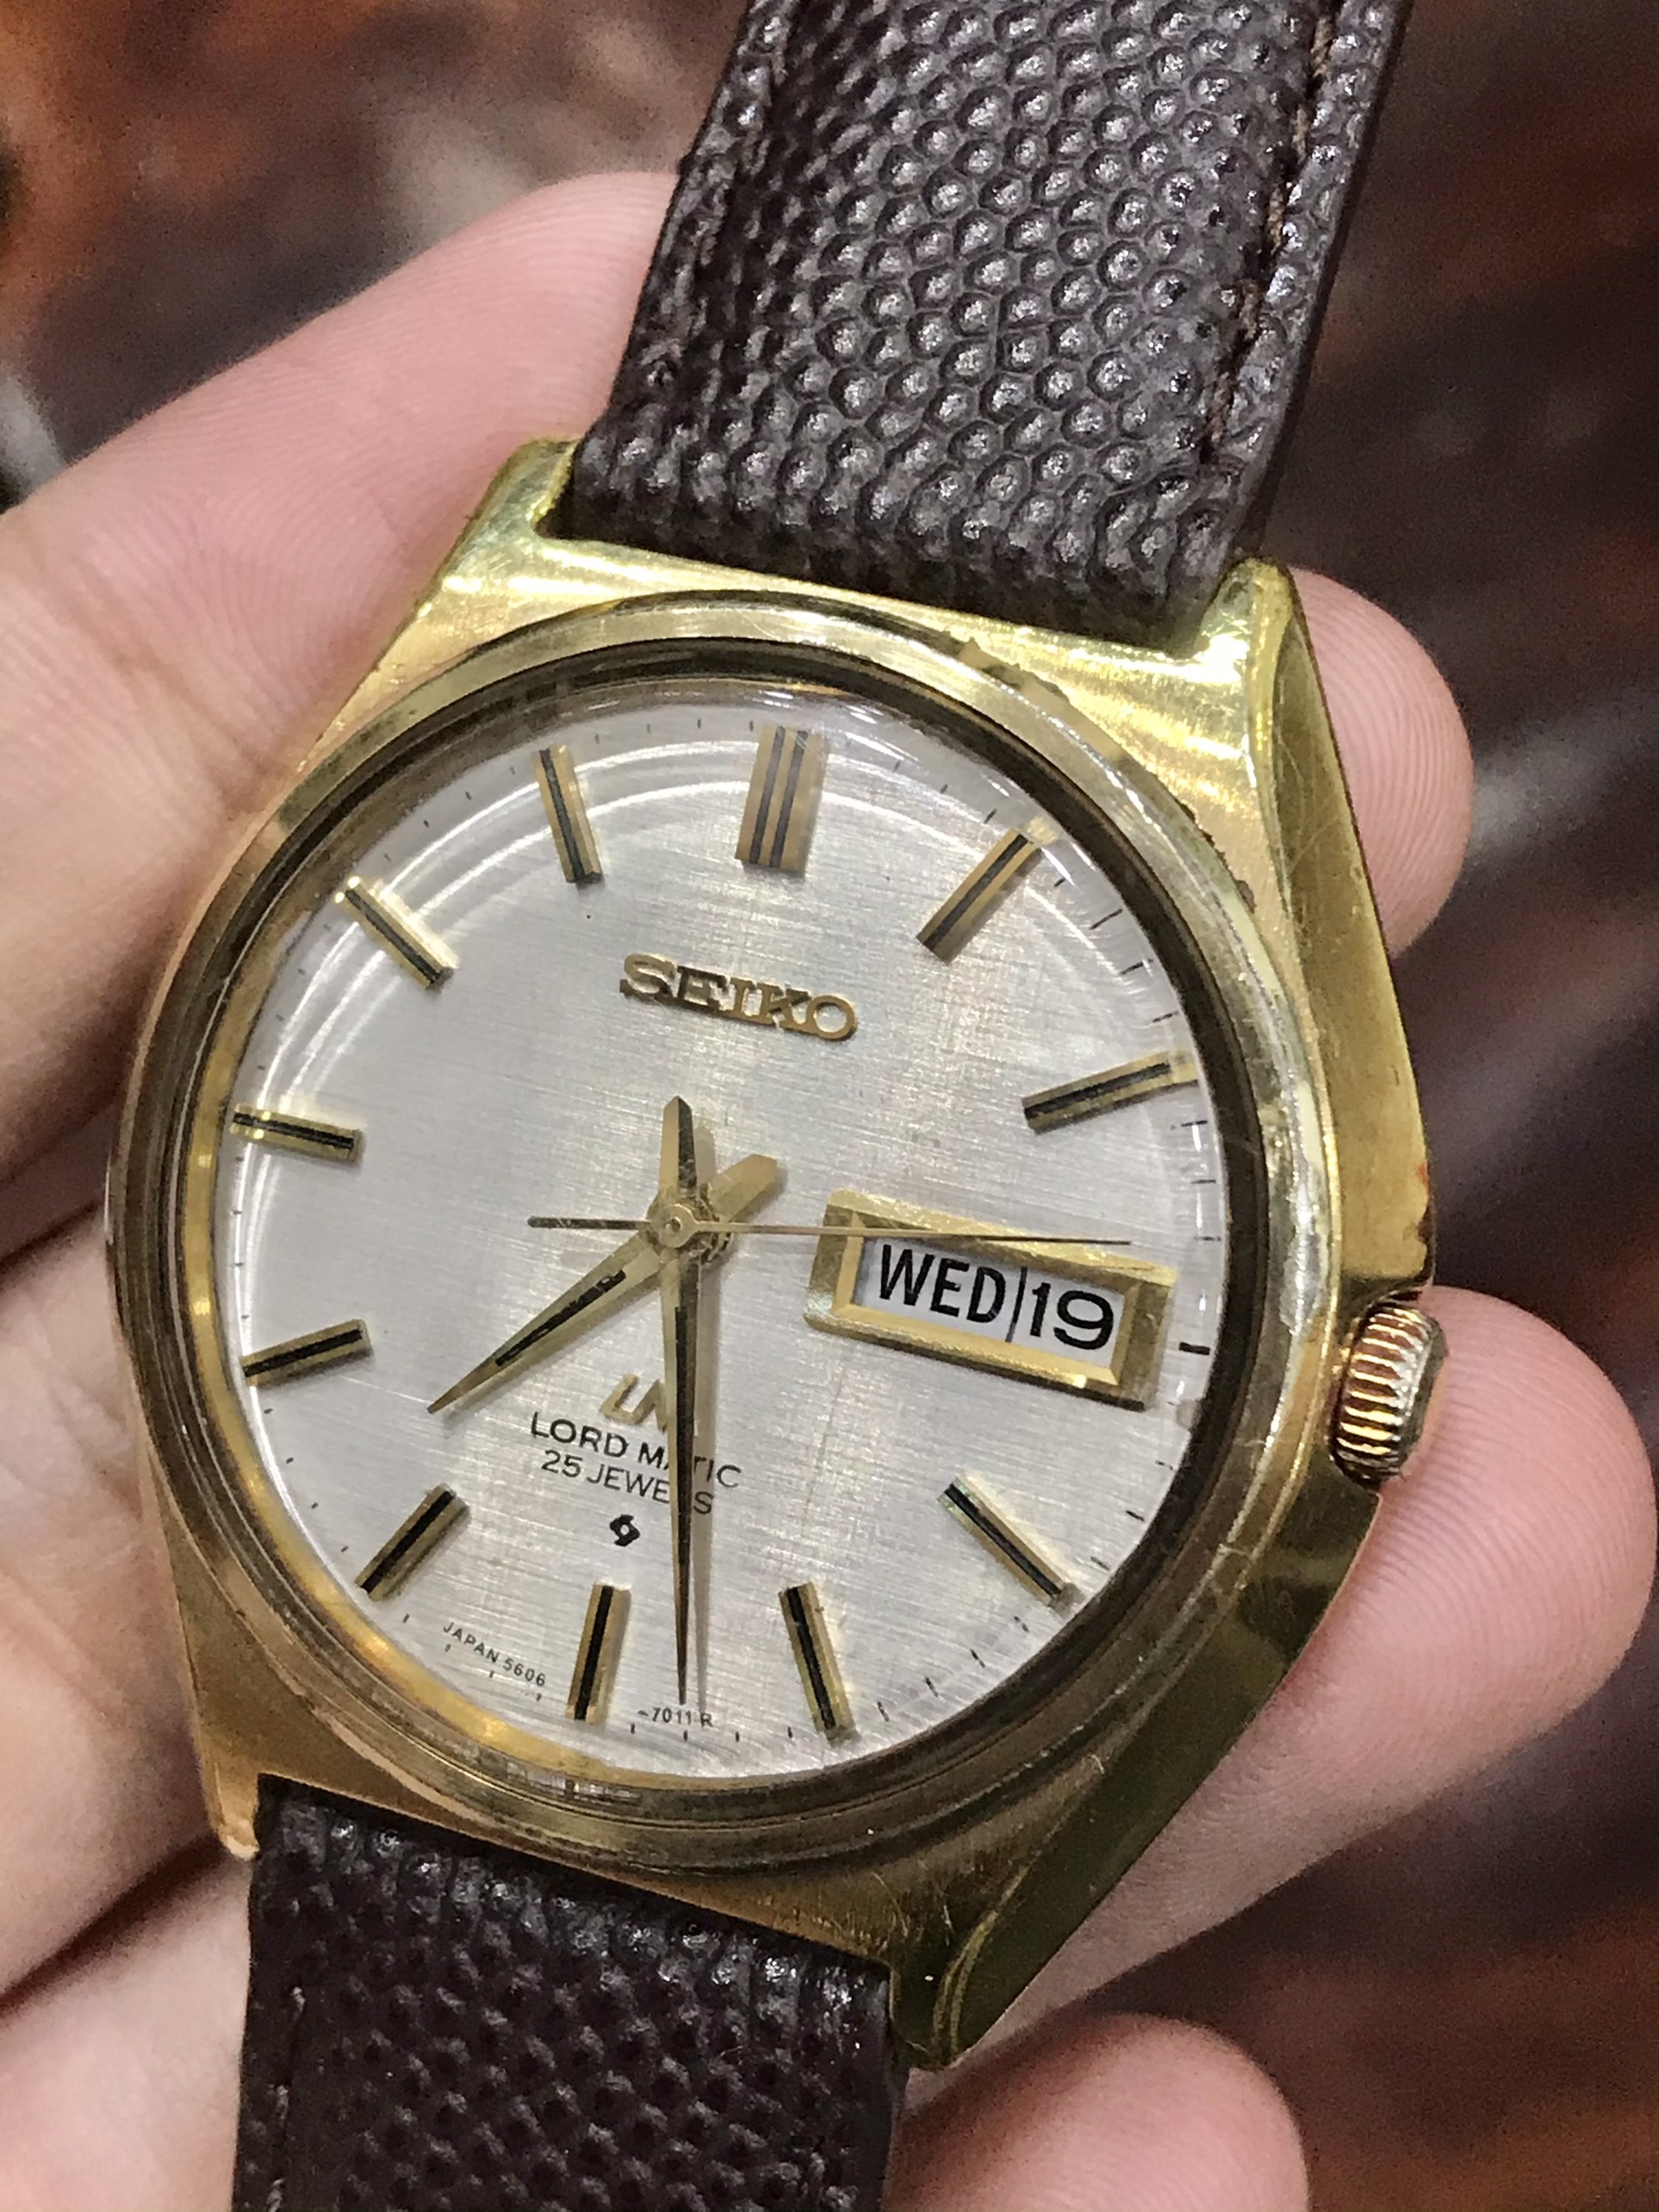 HCM]Đồng hồ nam Seiko Automatic LM 25 jewels - của Nhật 